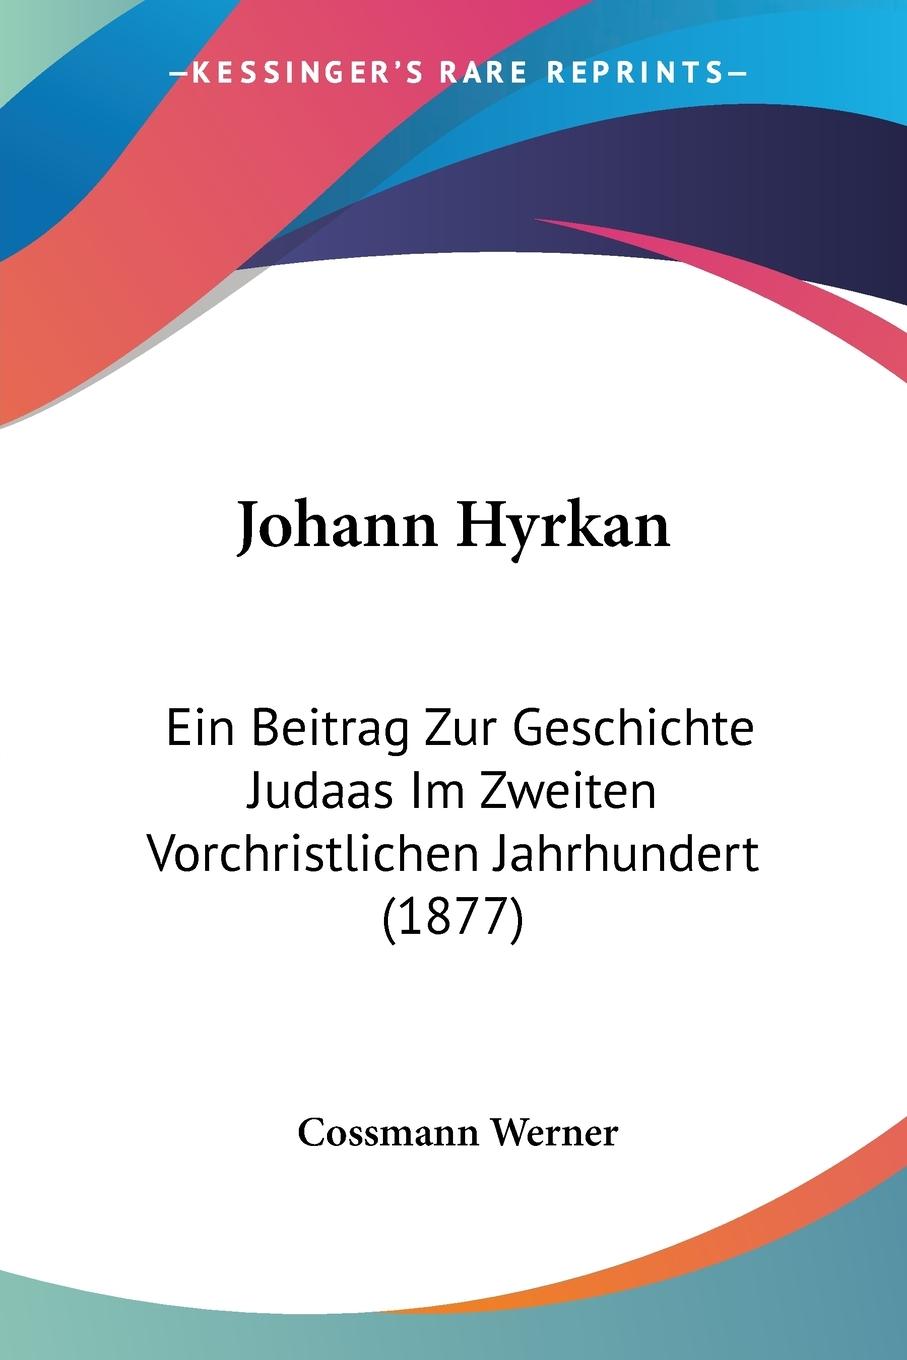 Johann Hyrkan - Werner, Cossmann